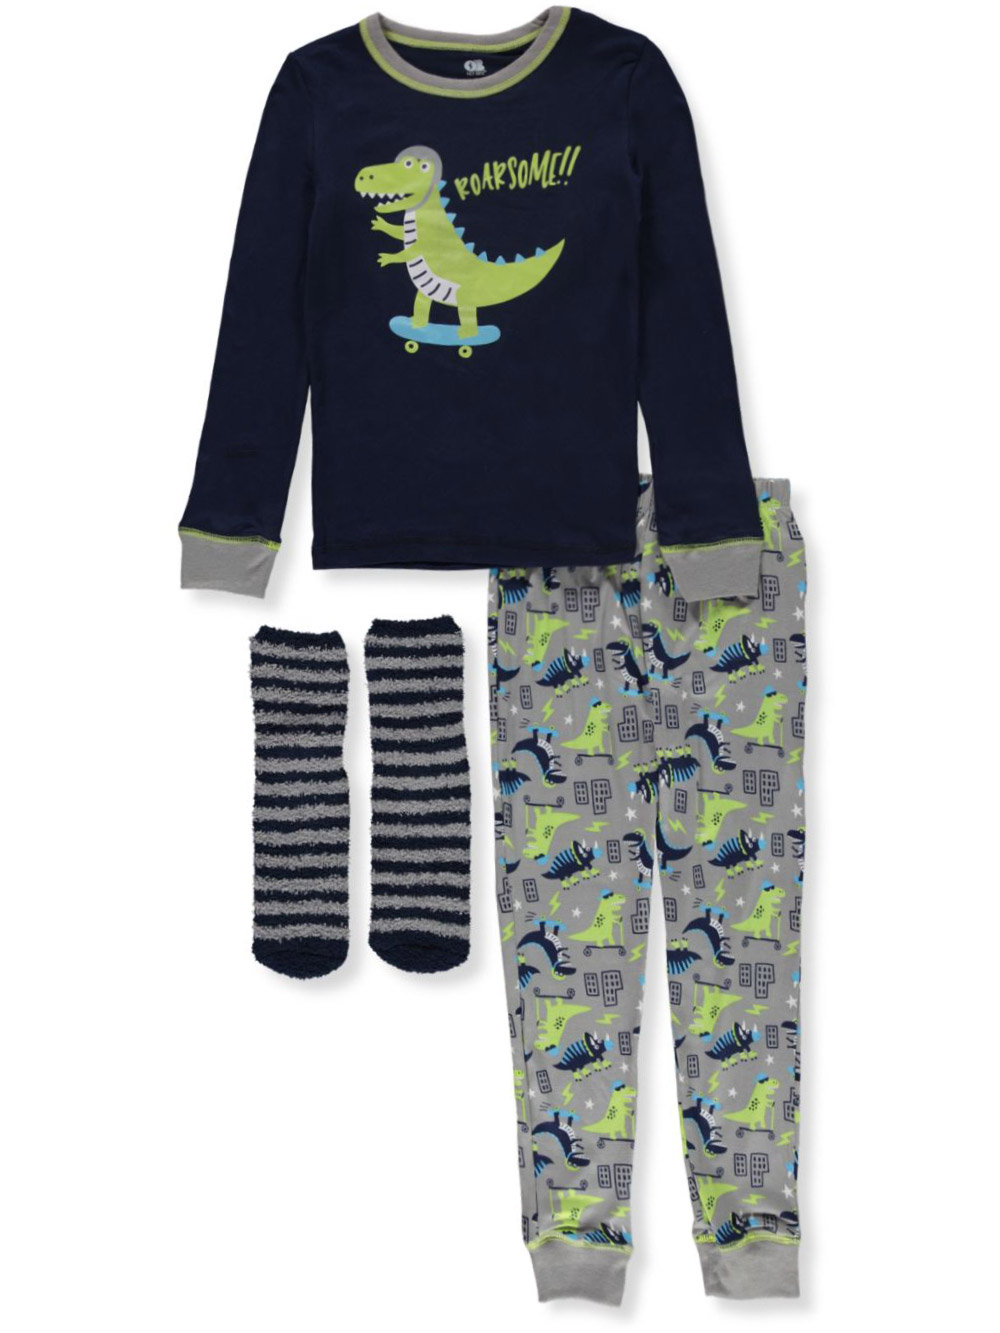 Boys Navy/Multi Sleepwear